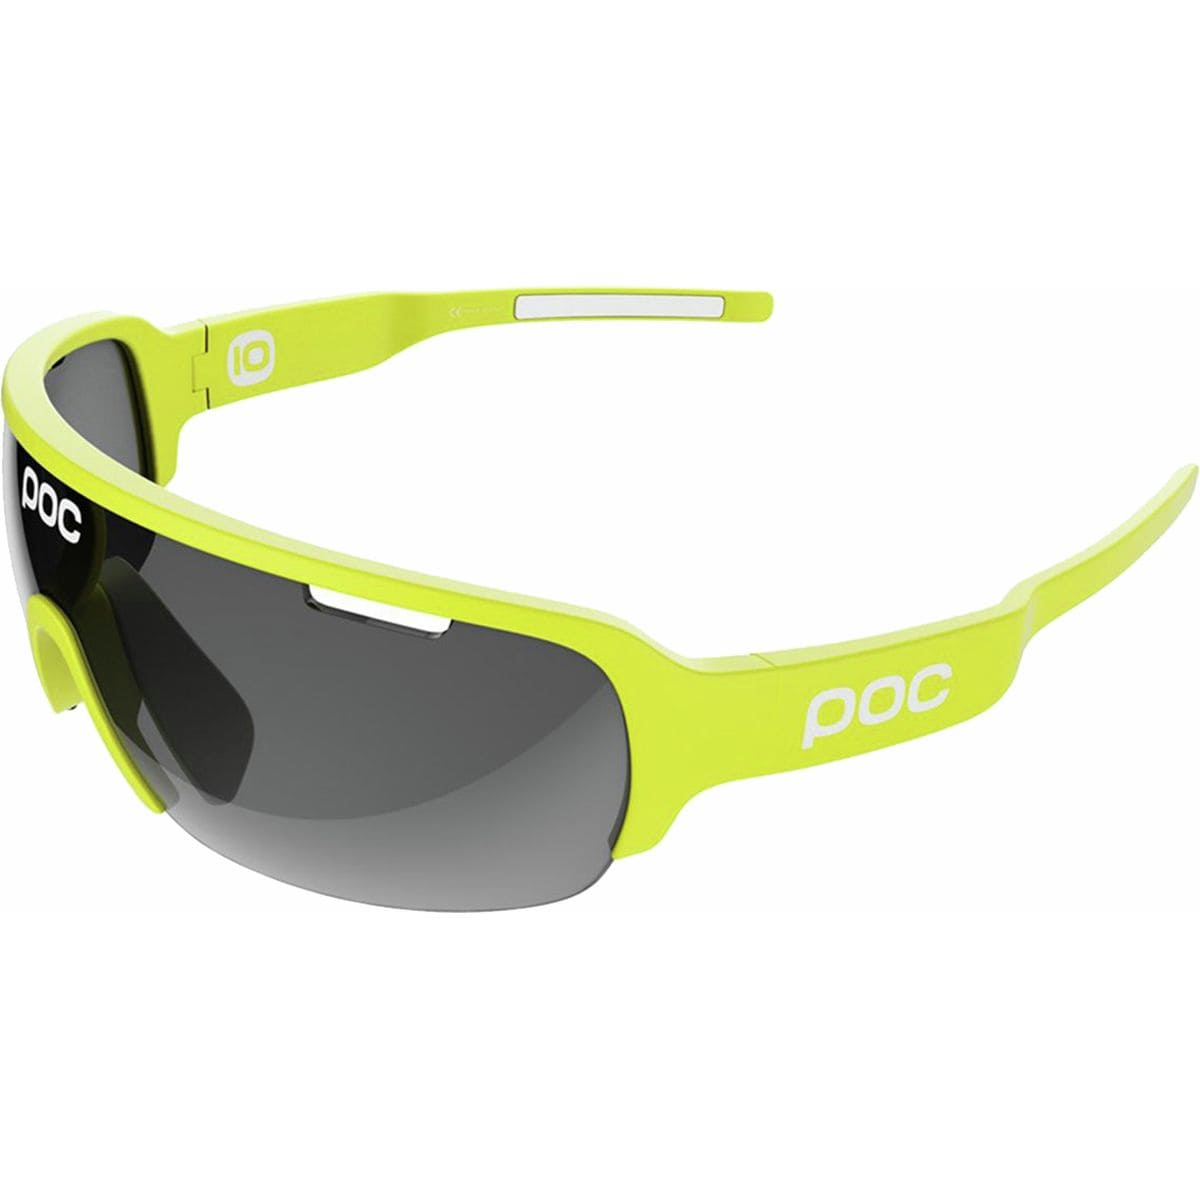 POC Do Half Blade Limited Edition Sunglasses - Men's